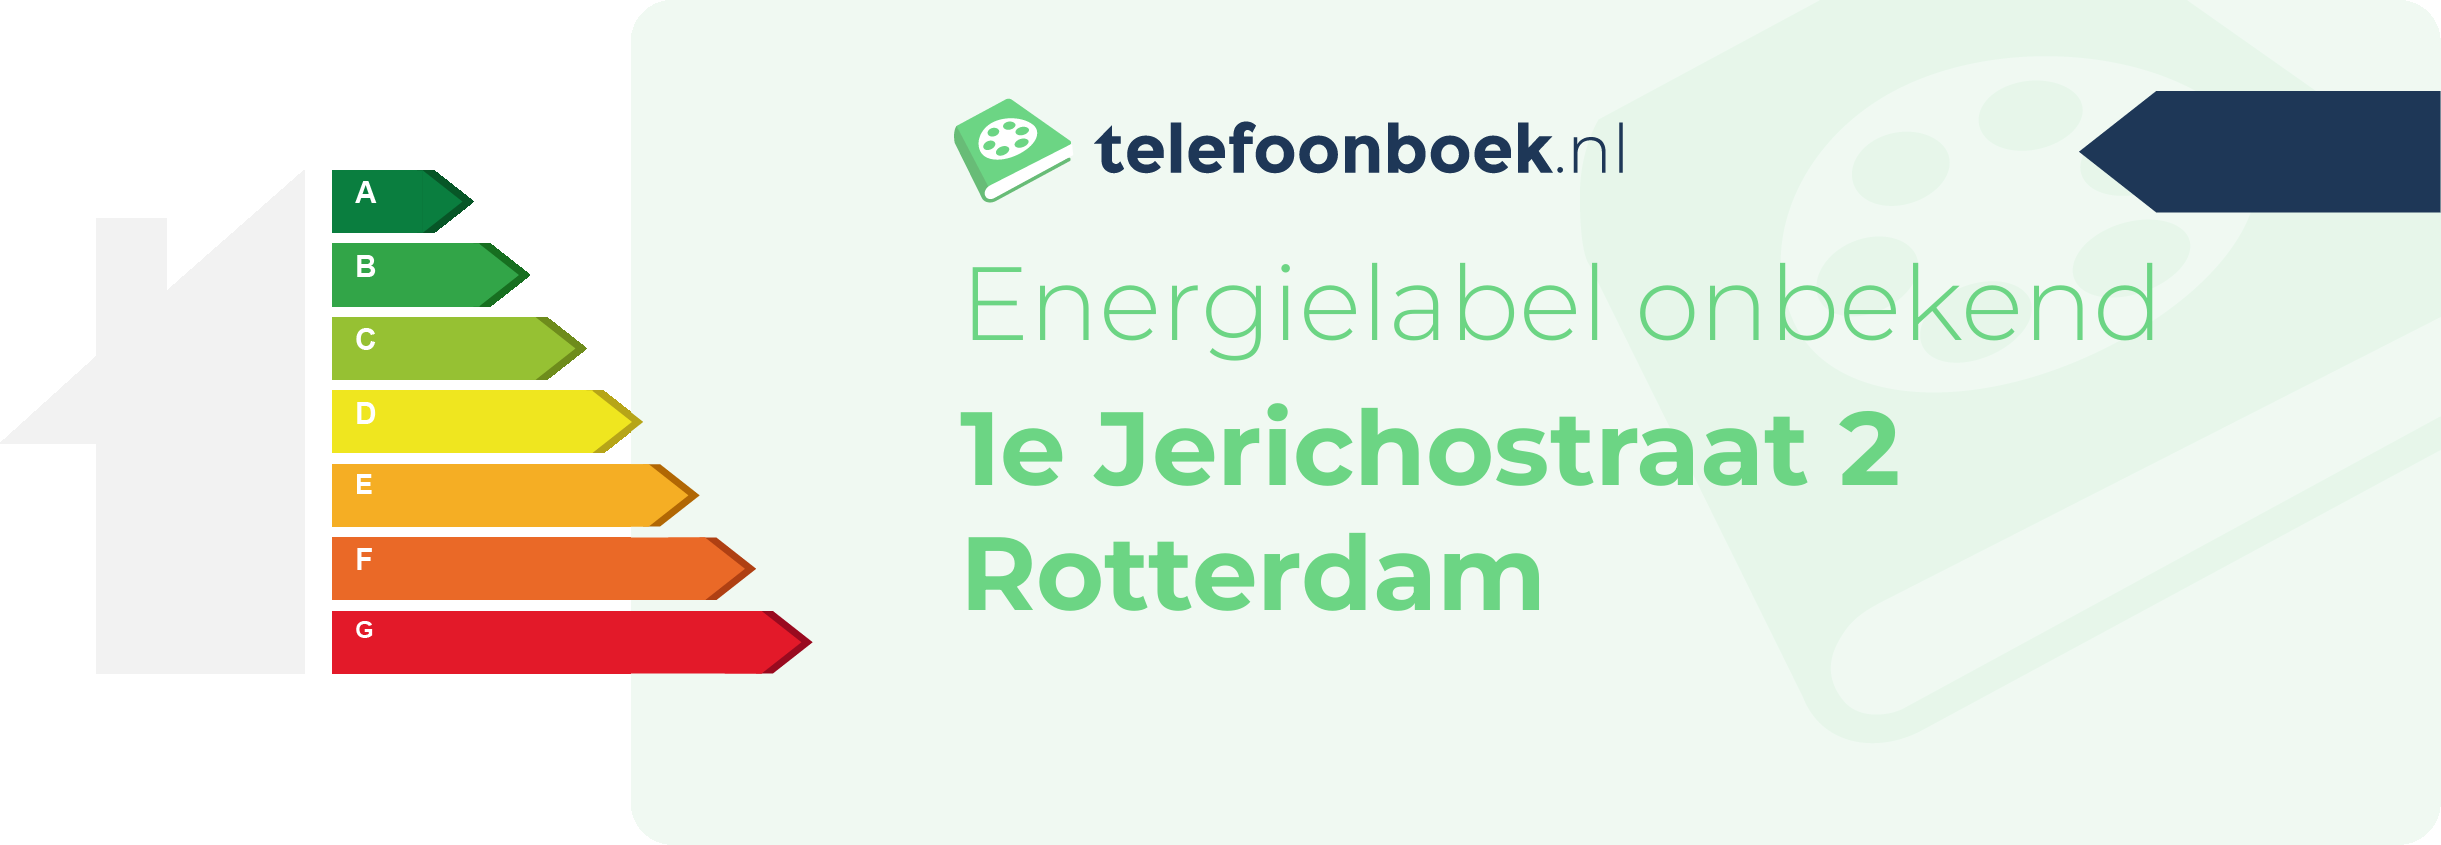 Energielabel 1e Jerichostraat 2 Rotterdam